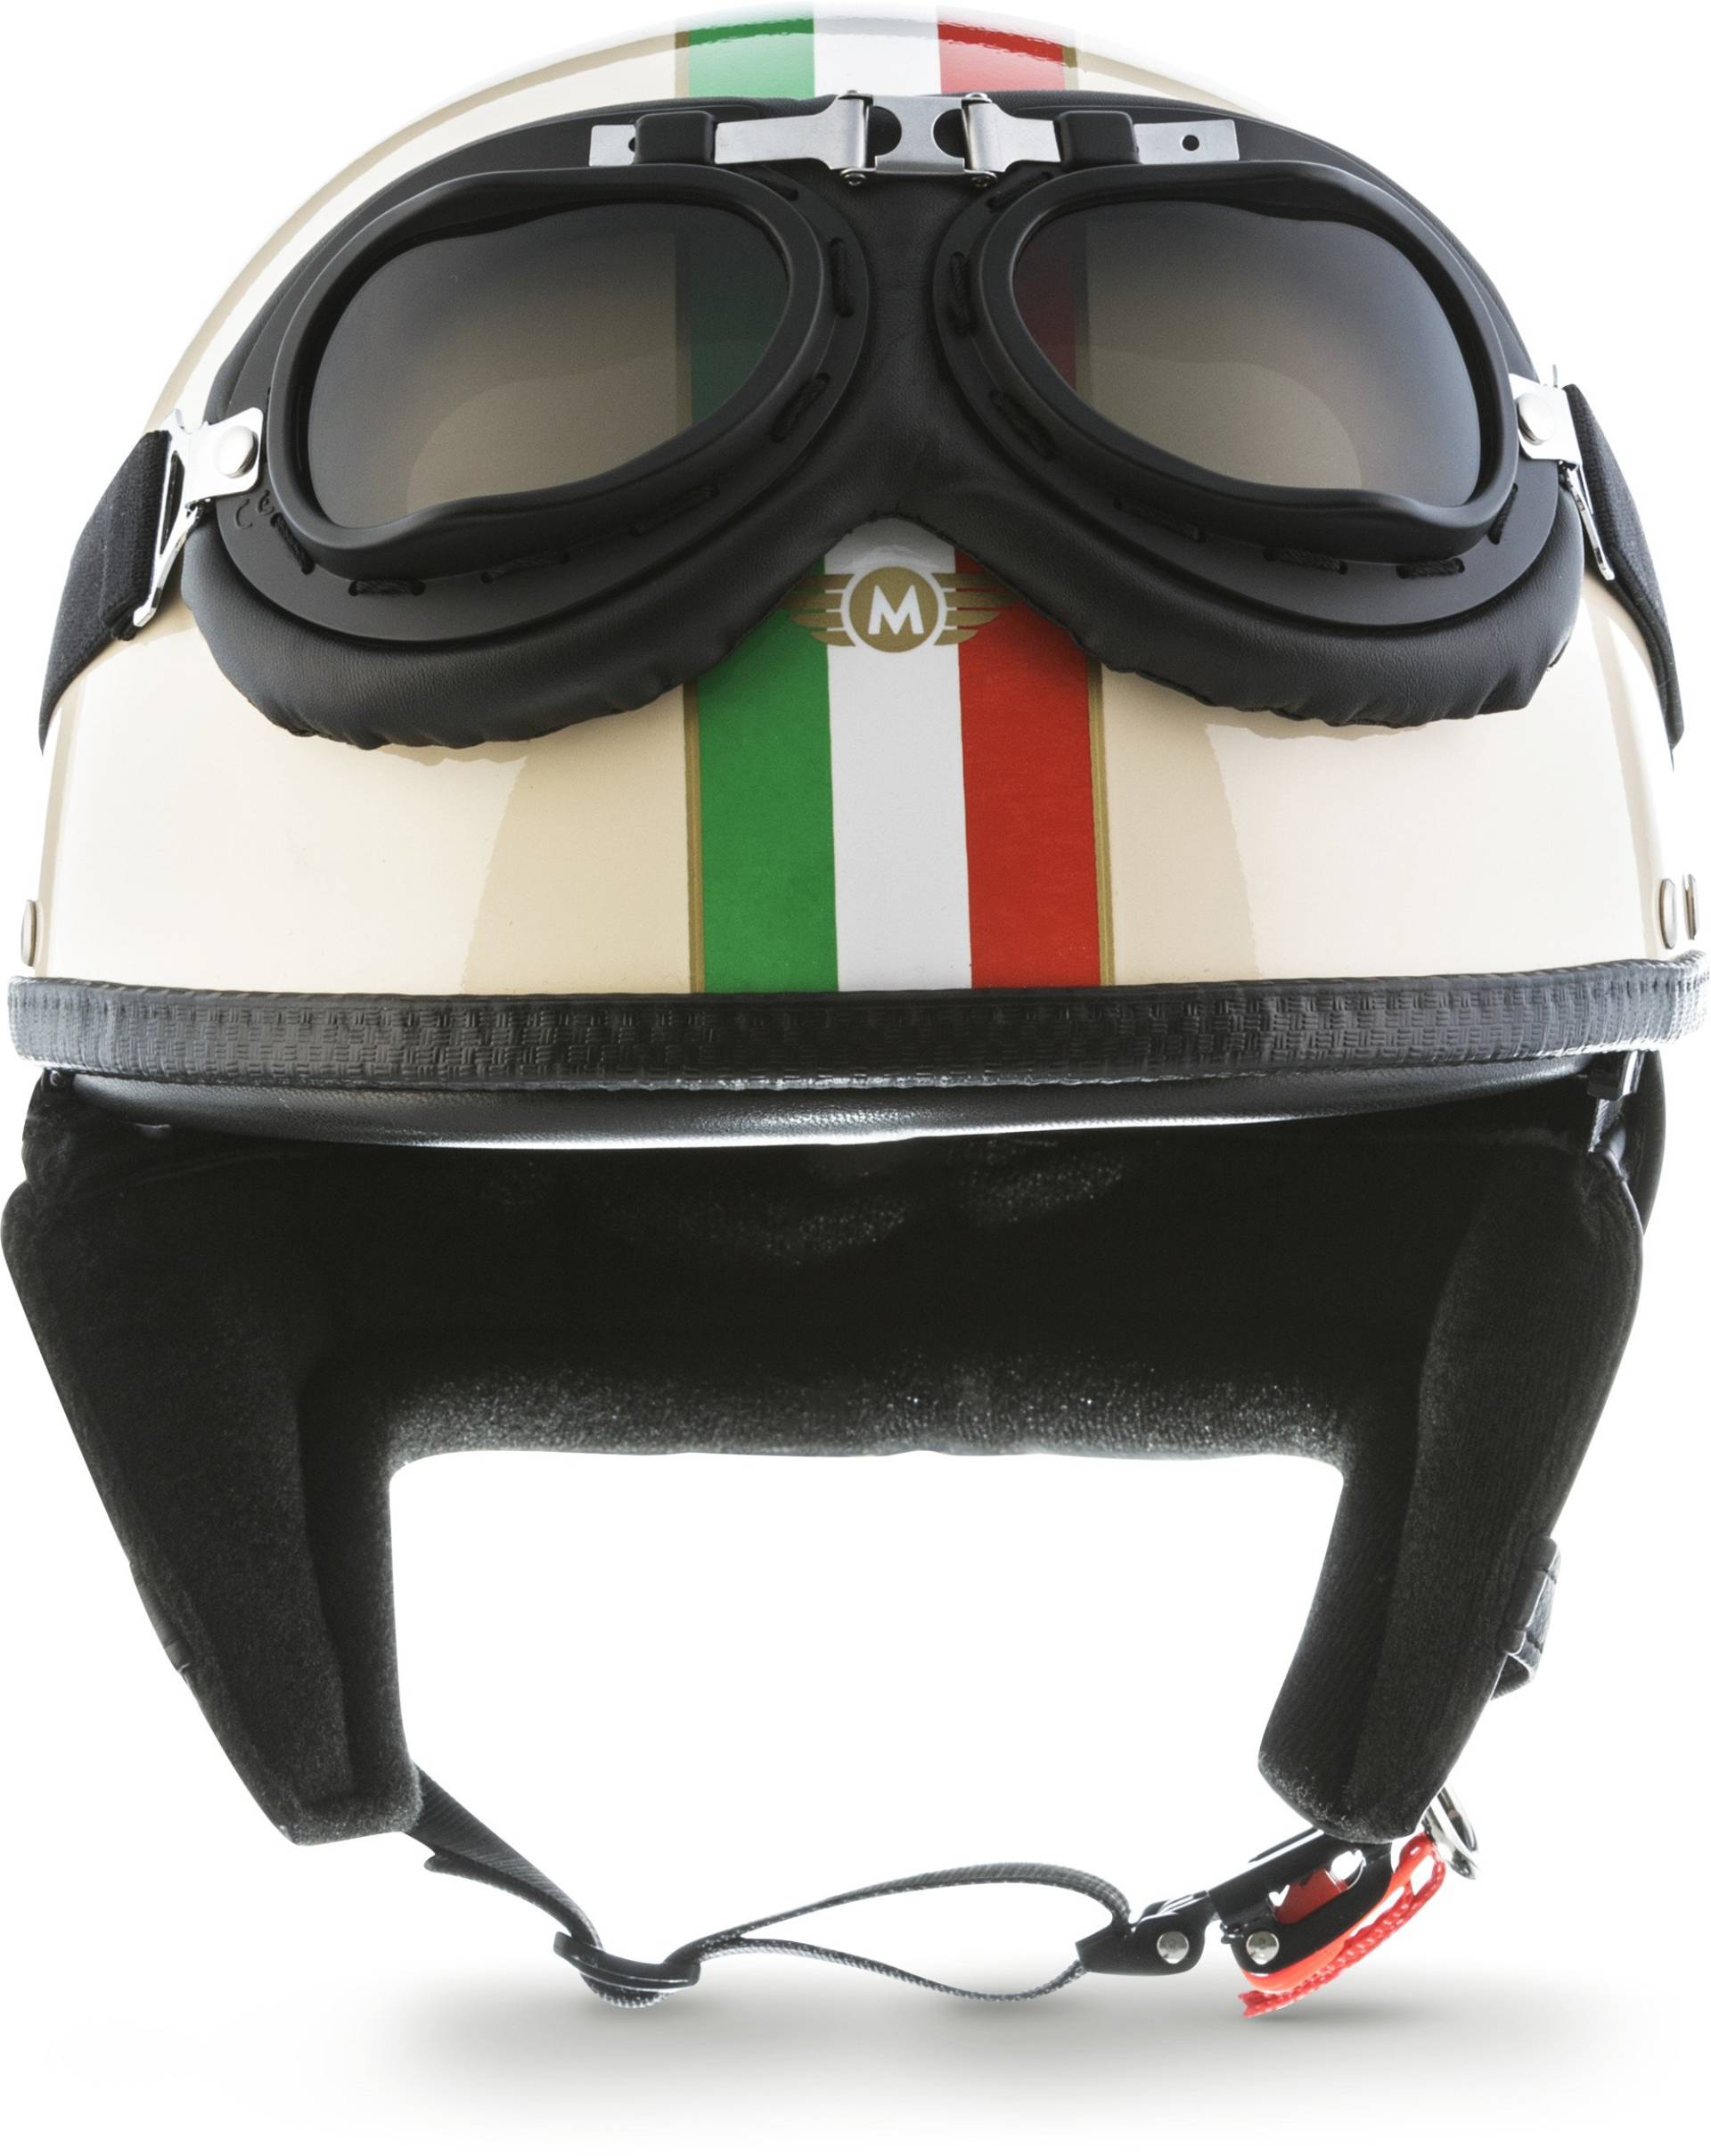 Moto Helmets® D22-Set „Italy“ · Brain-Cap · Halbschale Jet-Helm Motorrad-Helm Roller-Helm Scooter-Helm Bobber Mofa-Helm Chopper Retro Cruiser Vintage Pilot Biker Helmet Brille Visier · L (59-60cm) von Moto Helmets